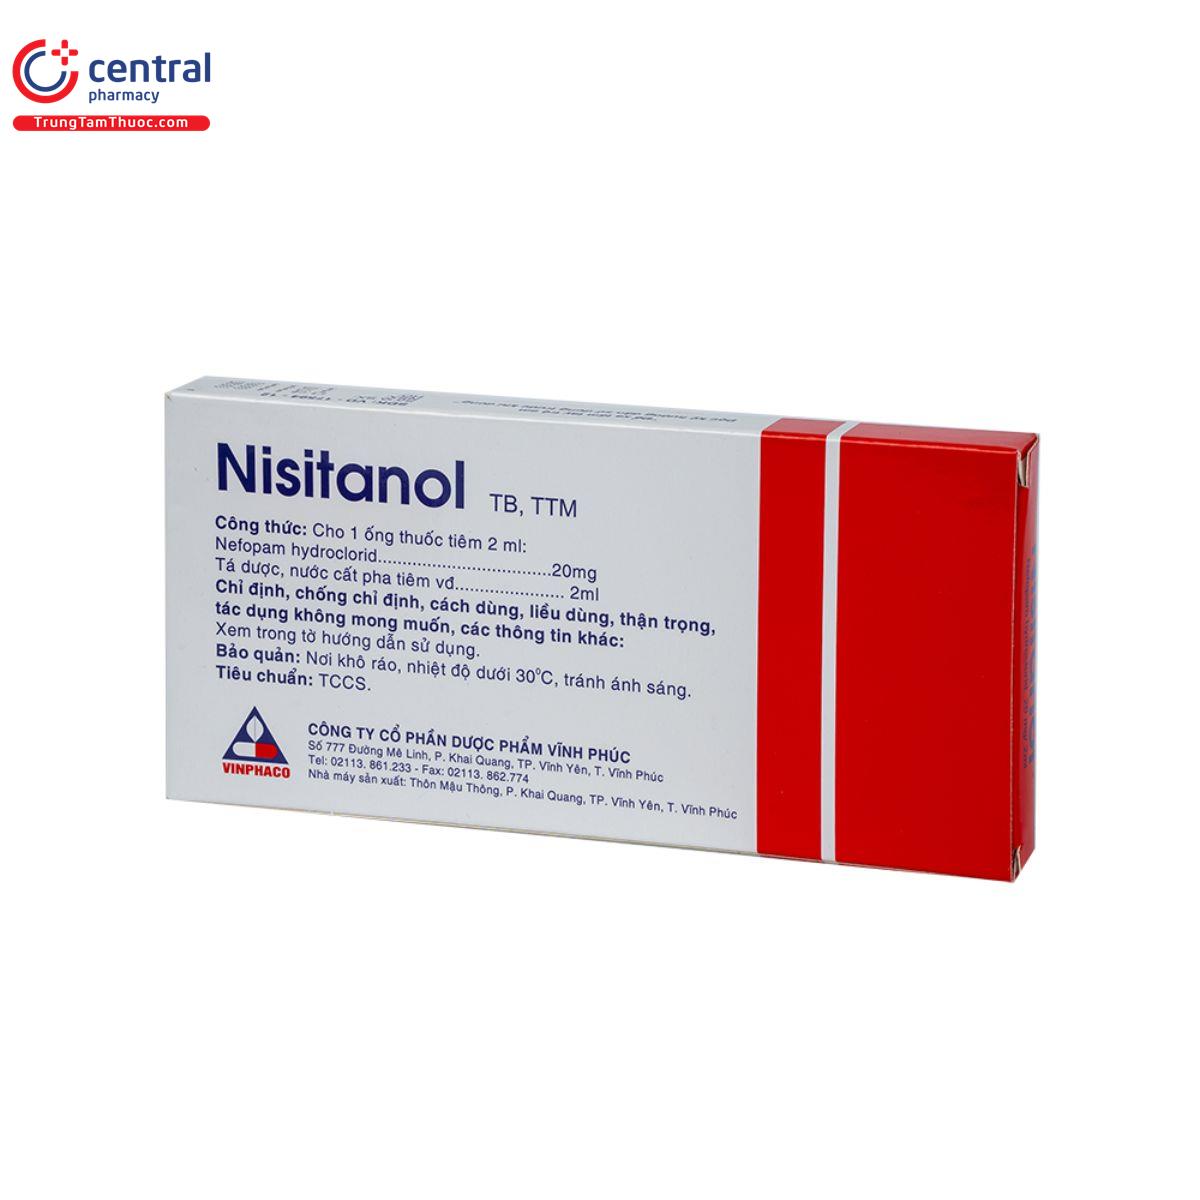 nisitanol 4 A0451